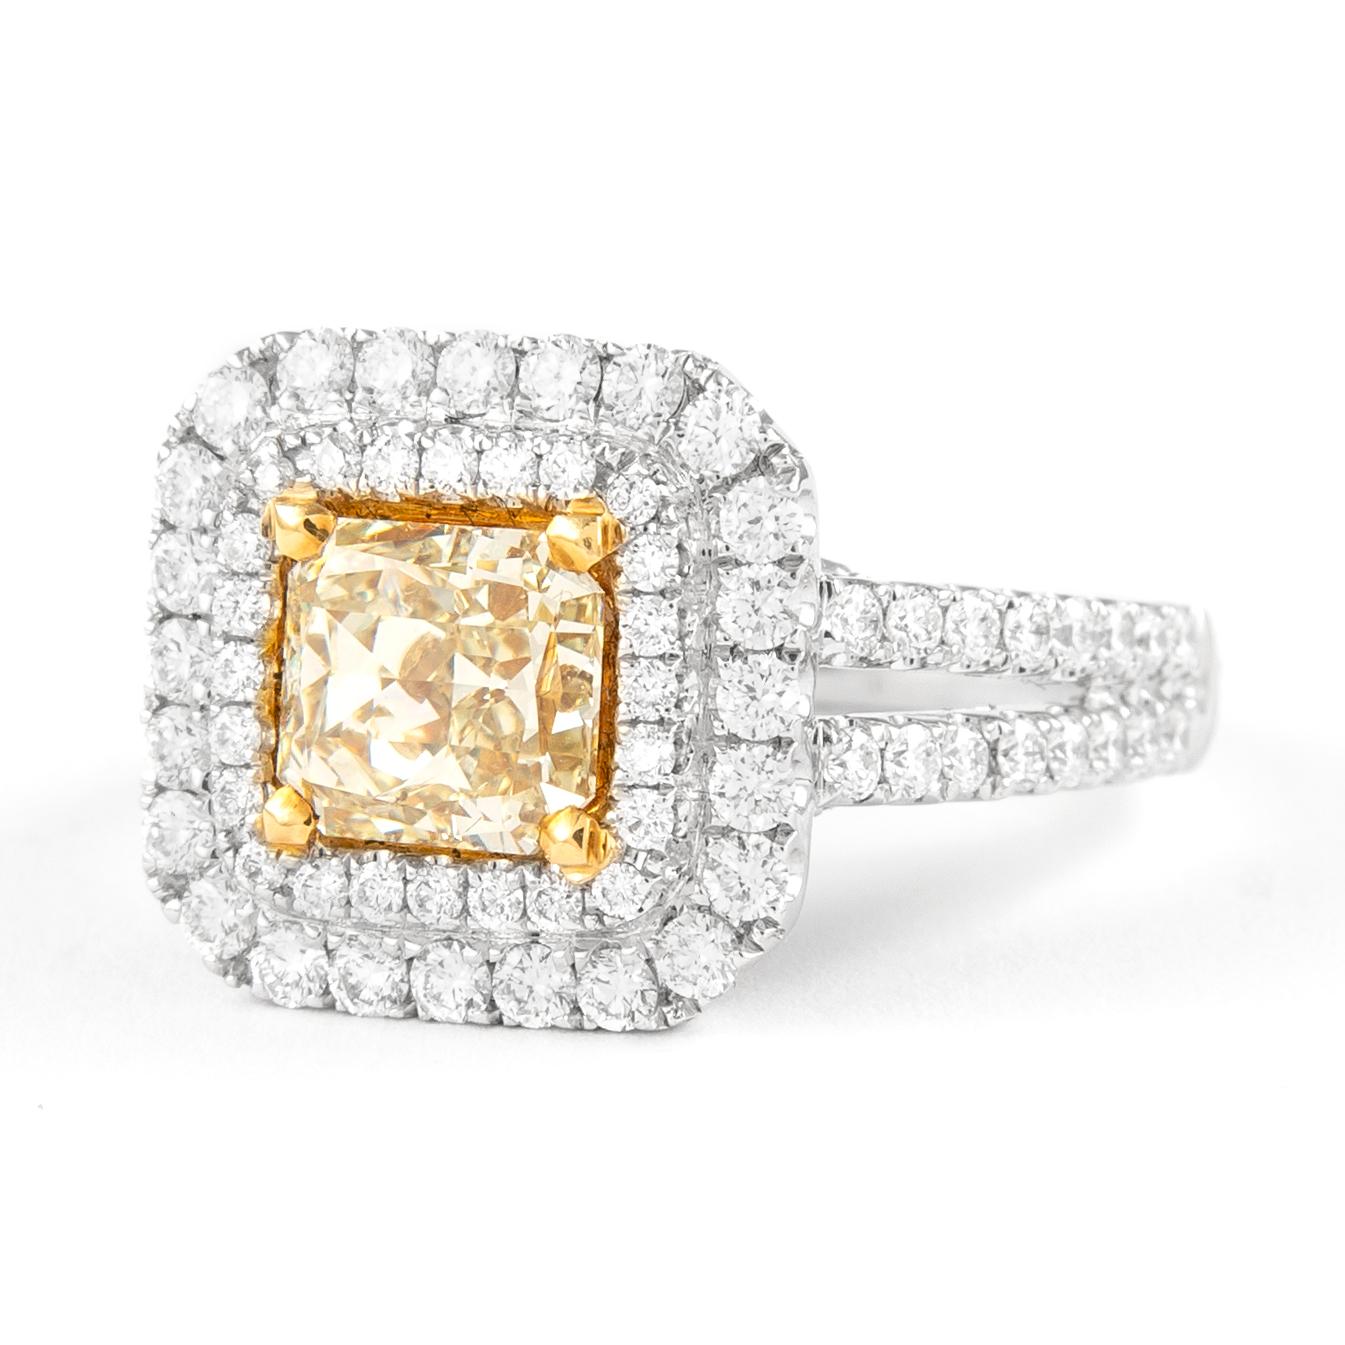 Contemporain Alexander, bague en or bicolore 18 carats avec double halo de diamants jaunes intenses de 1,62 carat en vente